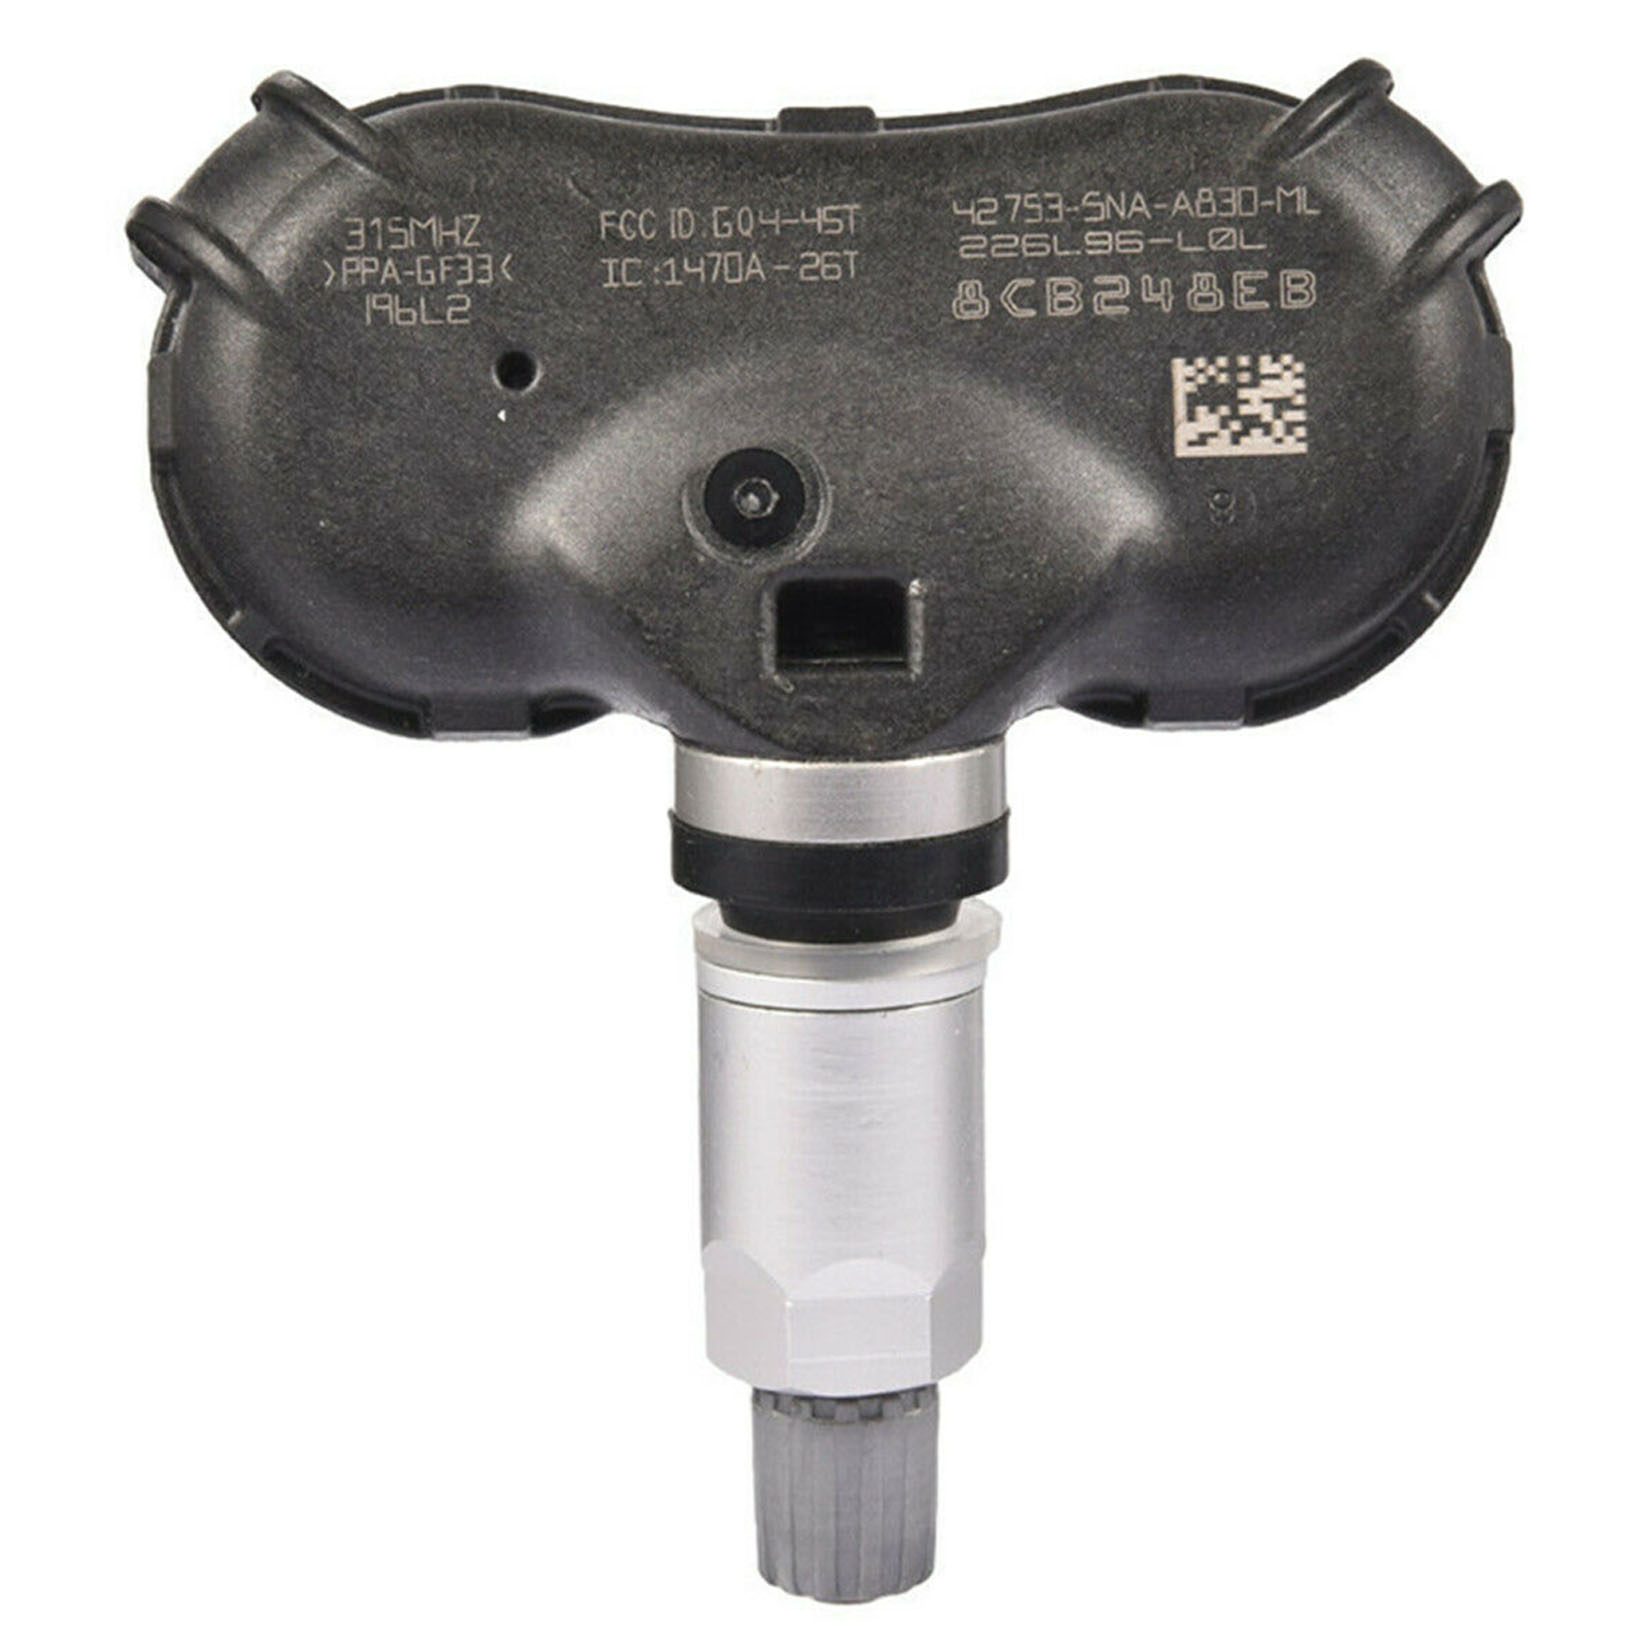 1 X Tire Pressure Monitor Sensor TPMS Fit for  Honda Odyssey 42753-SNA-A830-M1